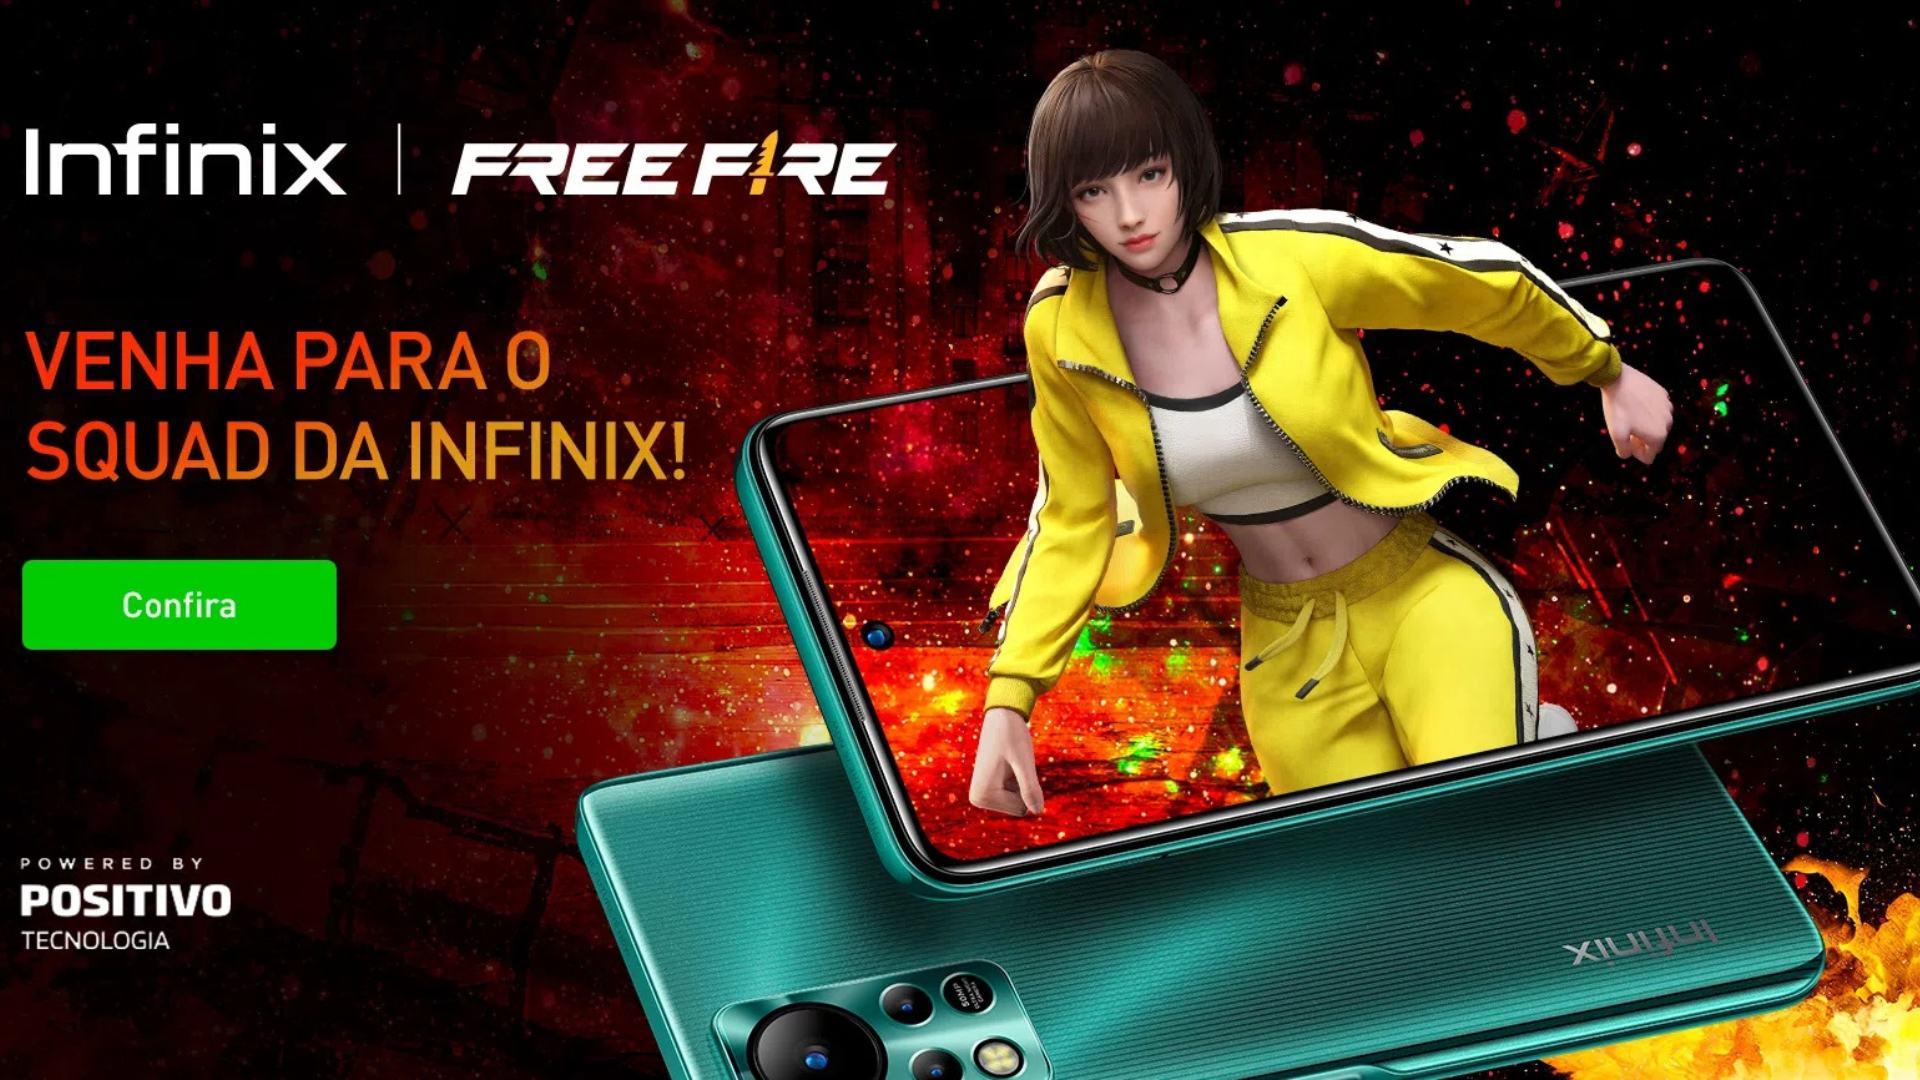 Smartphone INFINIX Free Fire Limited Edition: 21% de desconto na Amazon